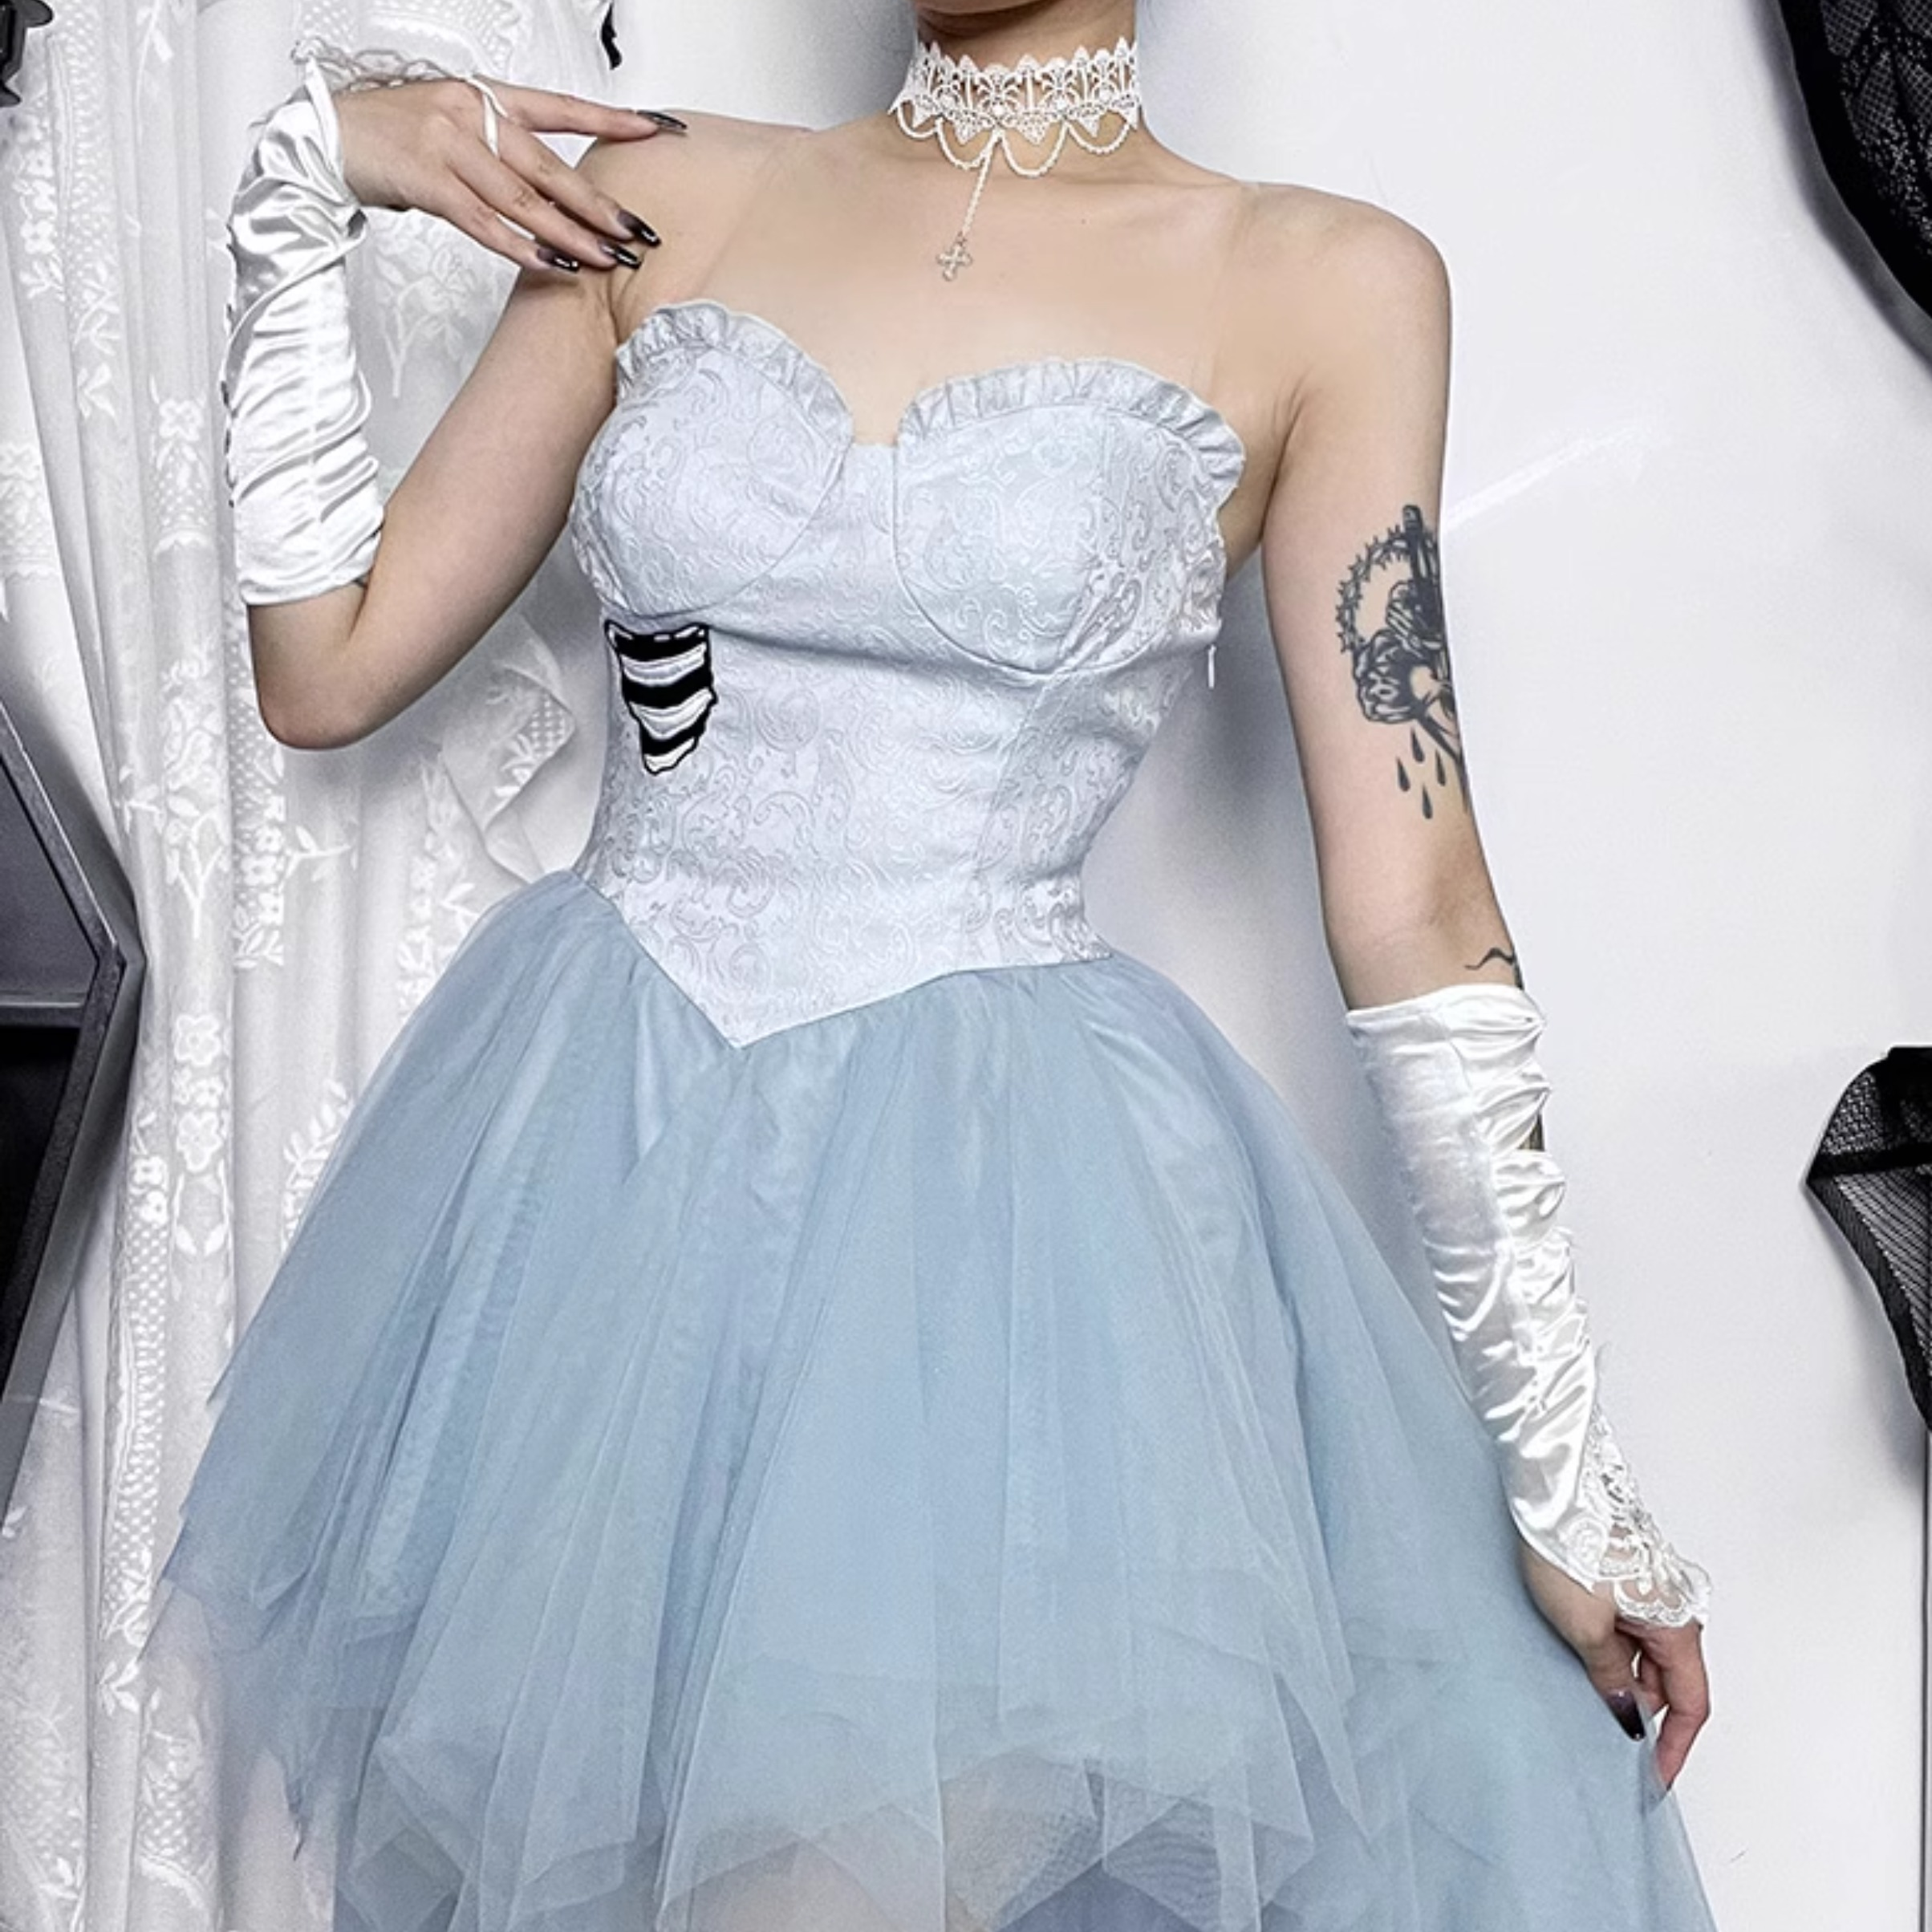 Corpse Bride  Dress